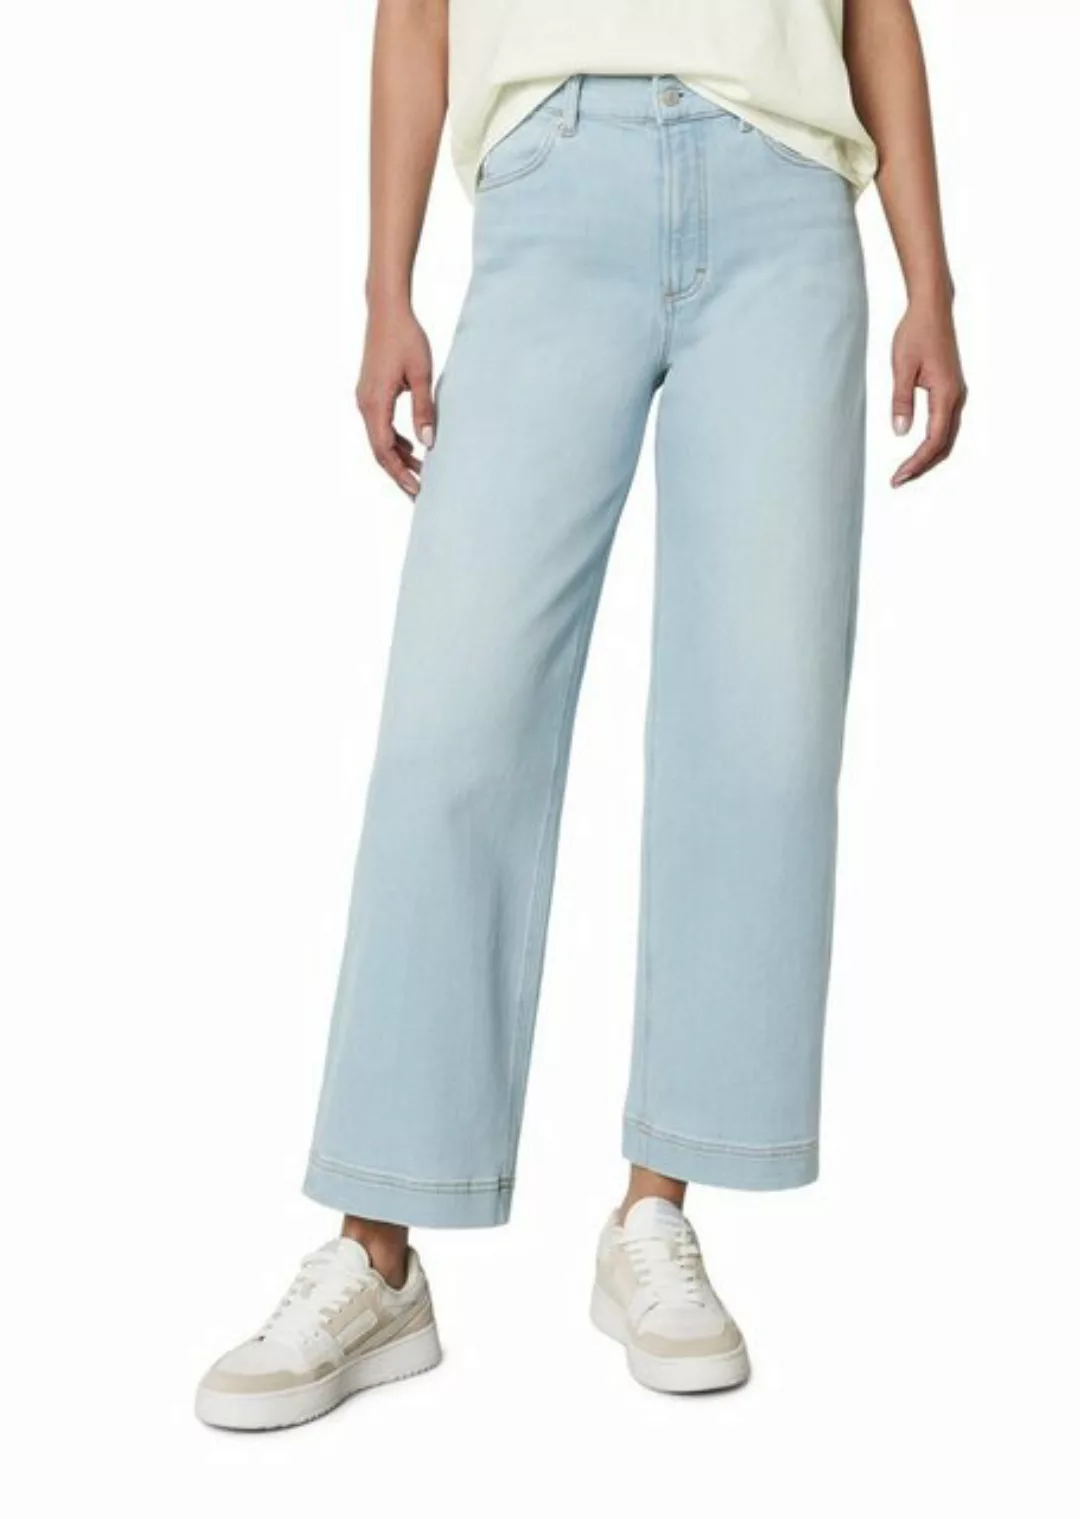 Marc O'Polo DENIM Ankle-Jeans Modell TOMMA cropped Super lässig und mega be günstig online kaufen